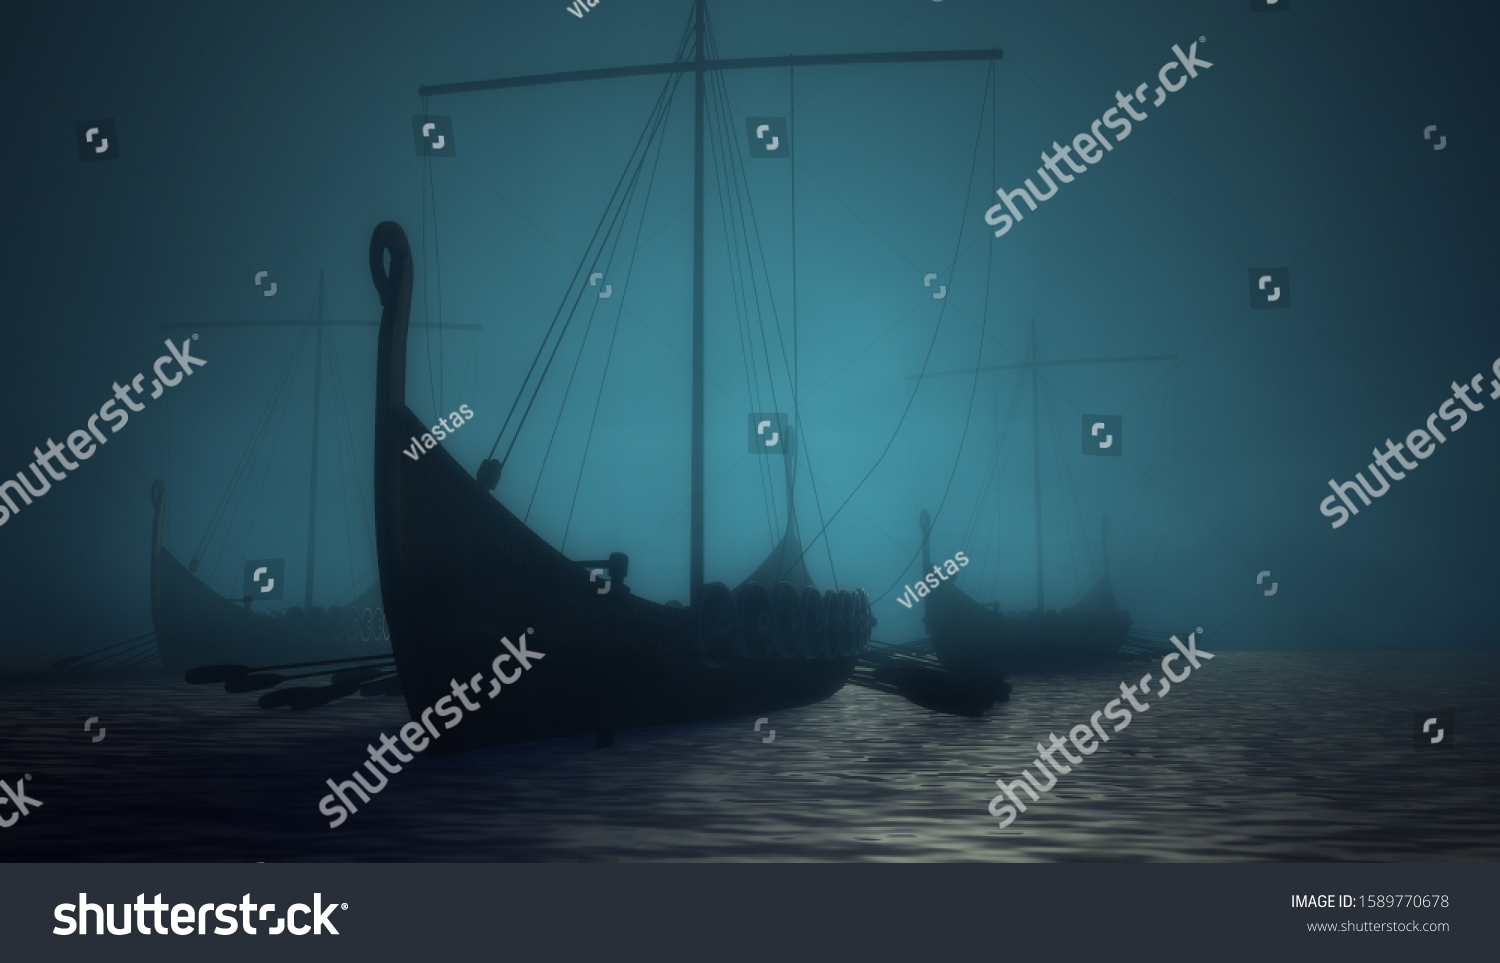 stock-photo-vikings-ships-on-the-blue-mysterious-water-d-render-illustration-1589770678.jpg